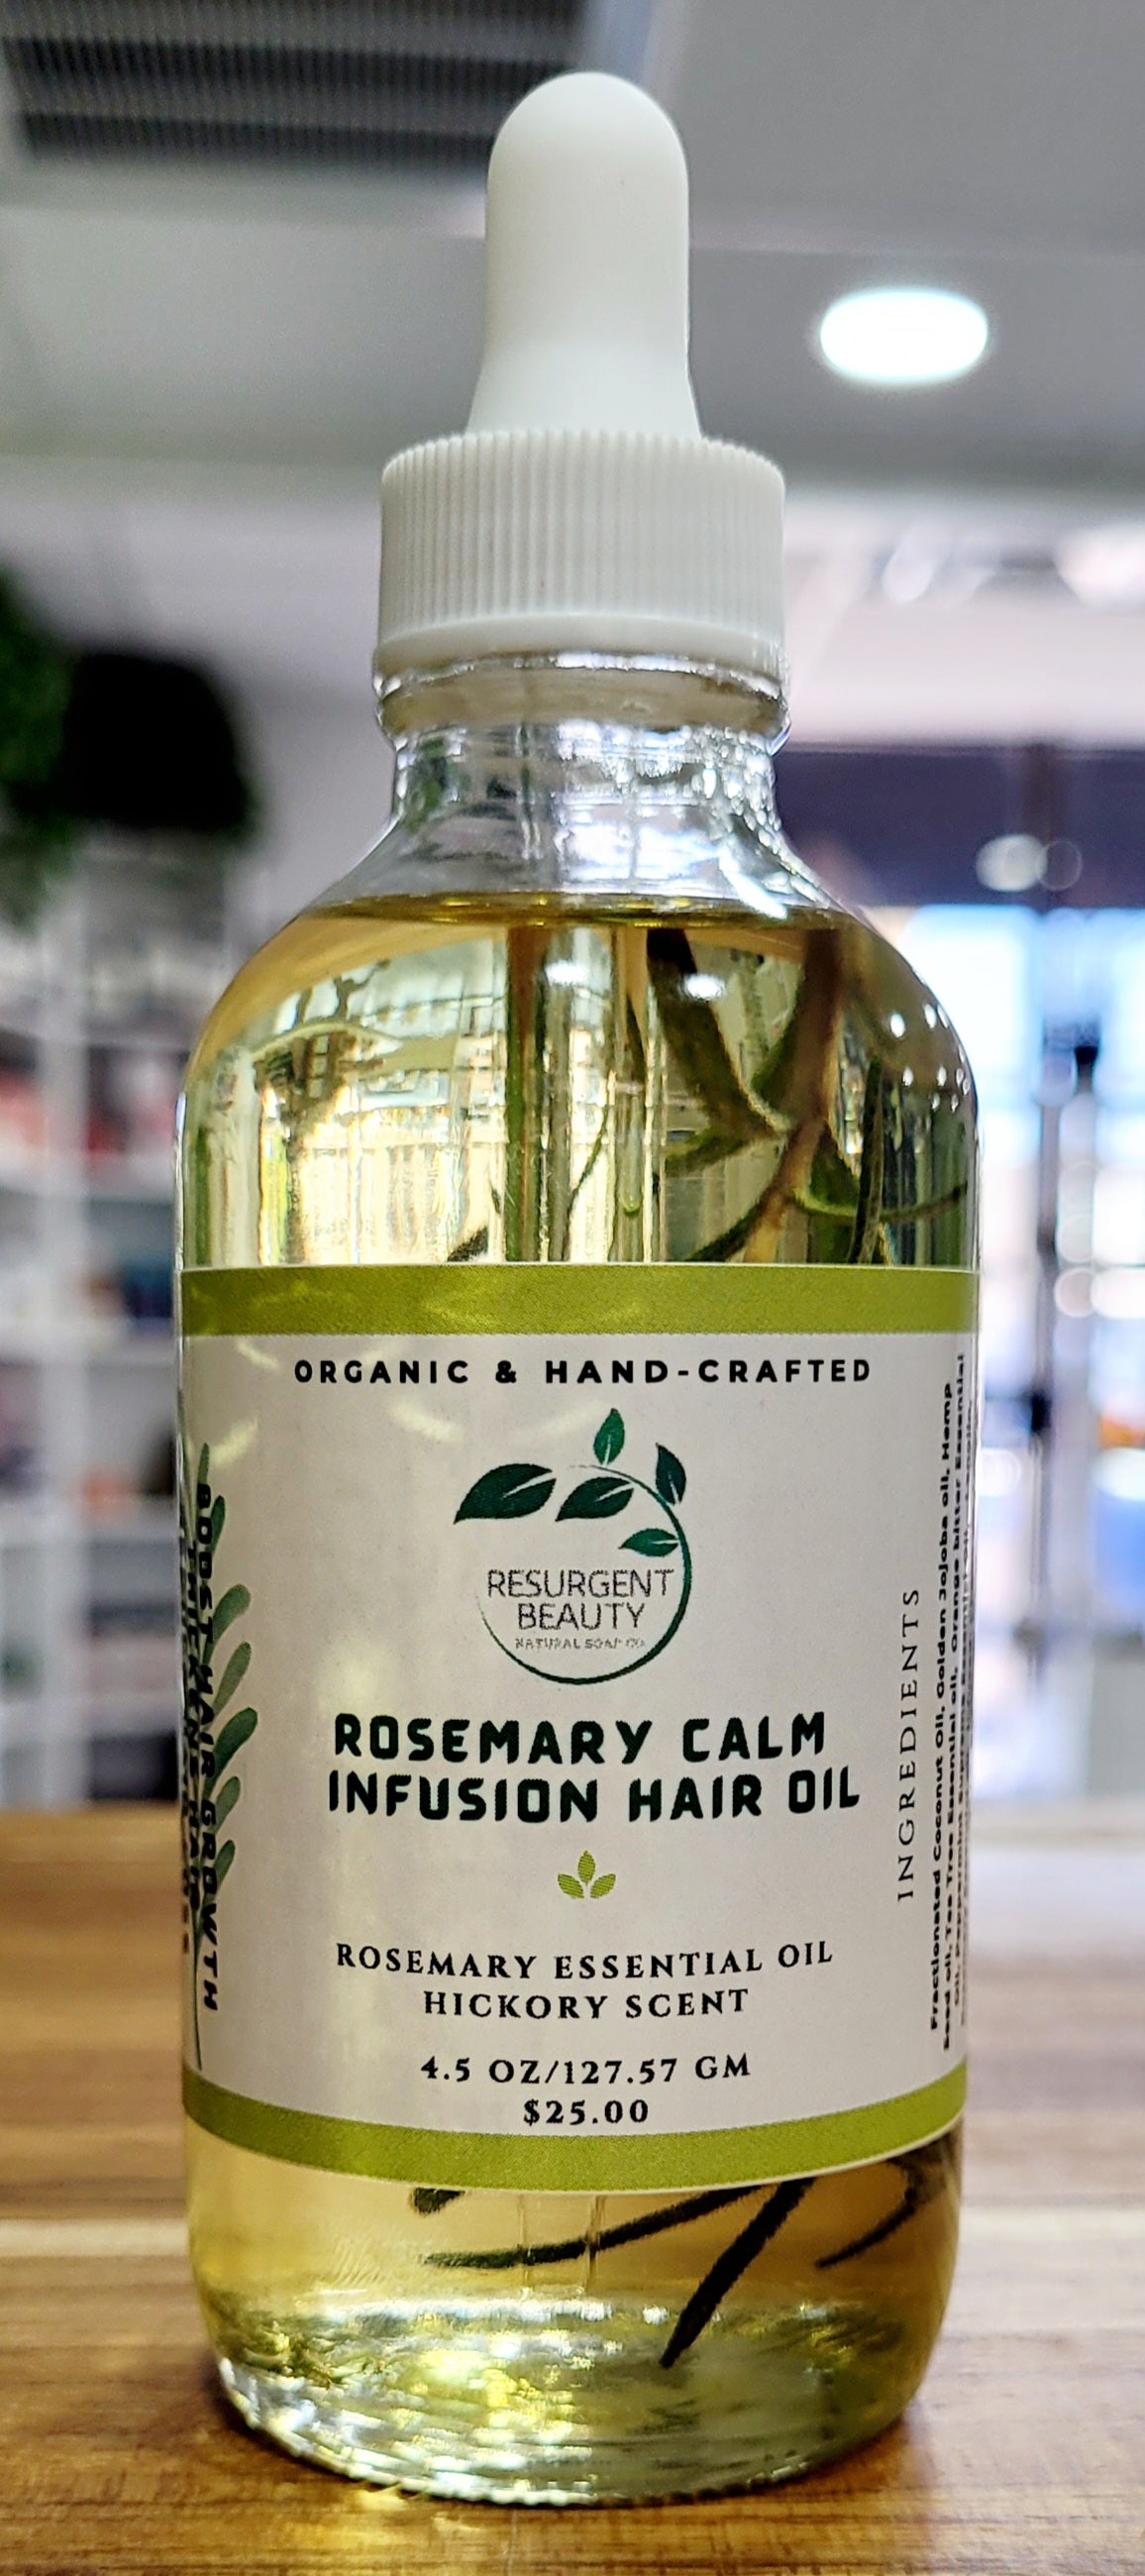 Rosemary Calm Infusion Hair oil